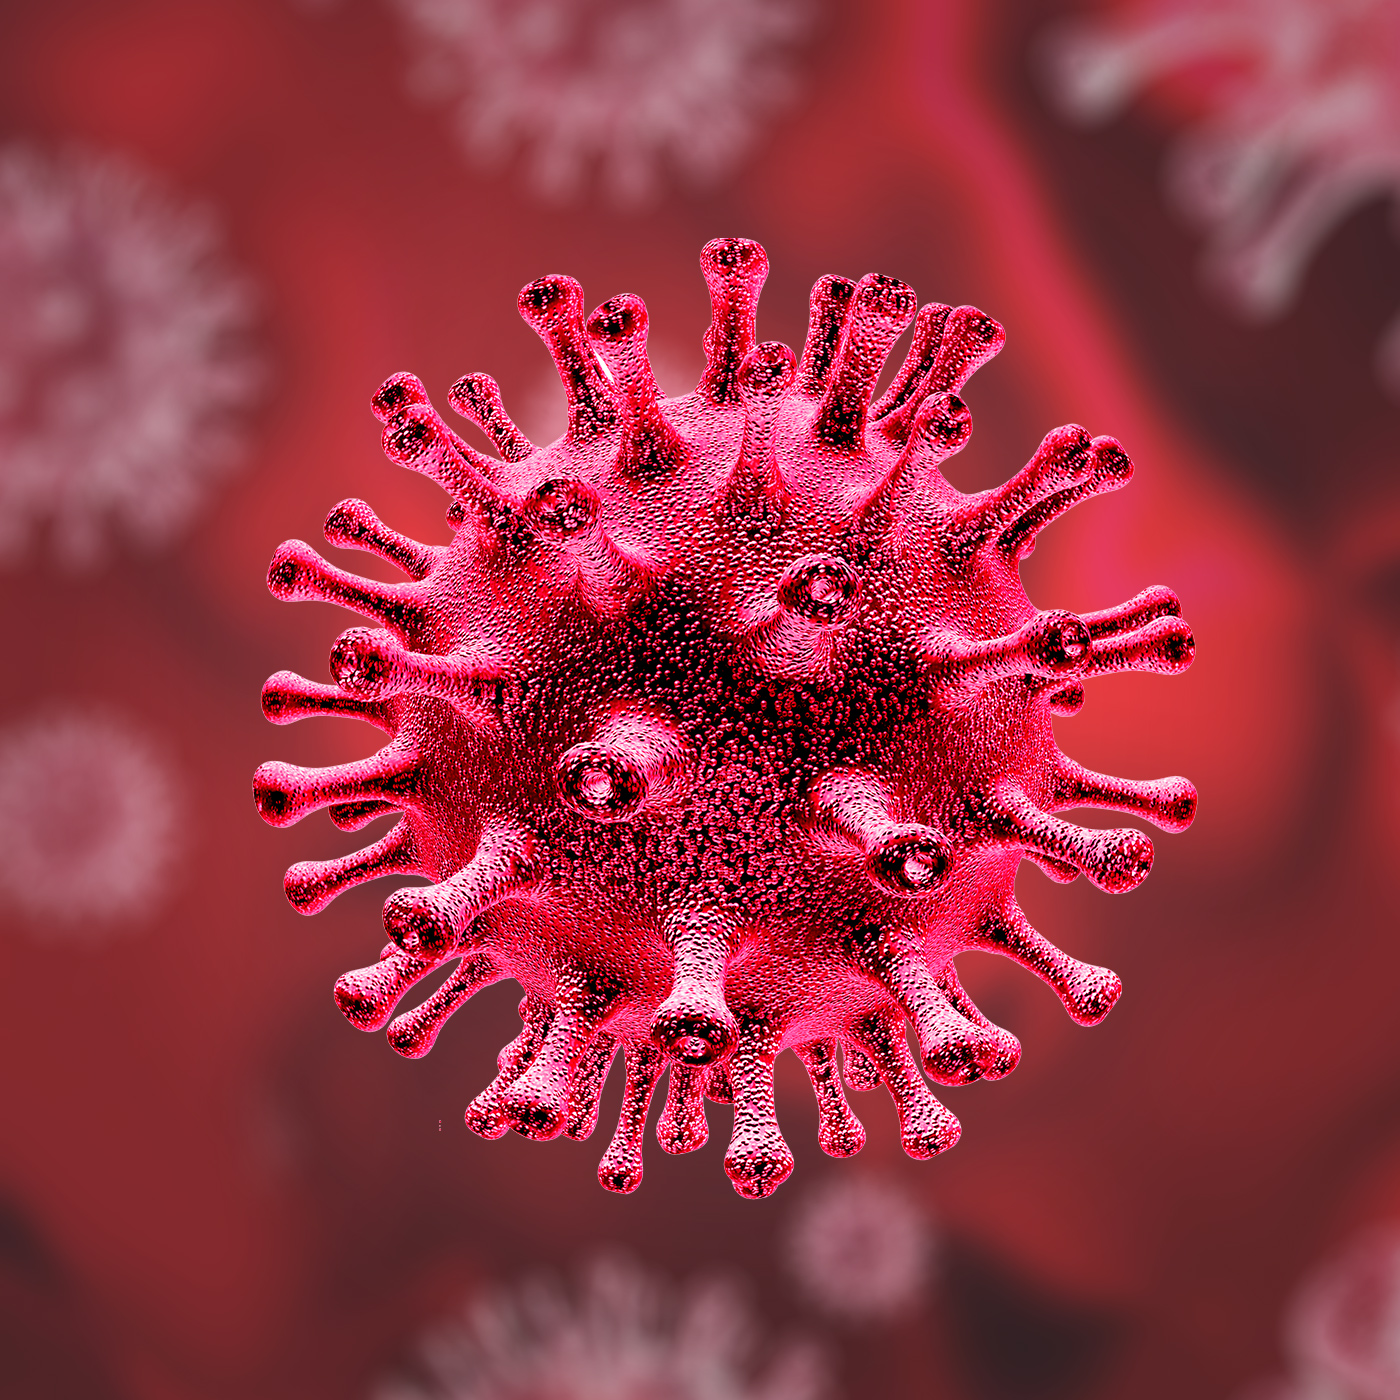 Koronavirusi se mogu učinkovito razdvojiti pomoću filtera H14